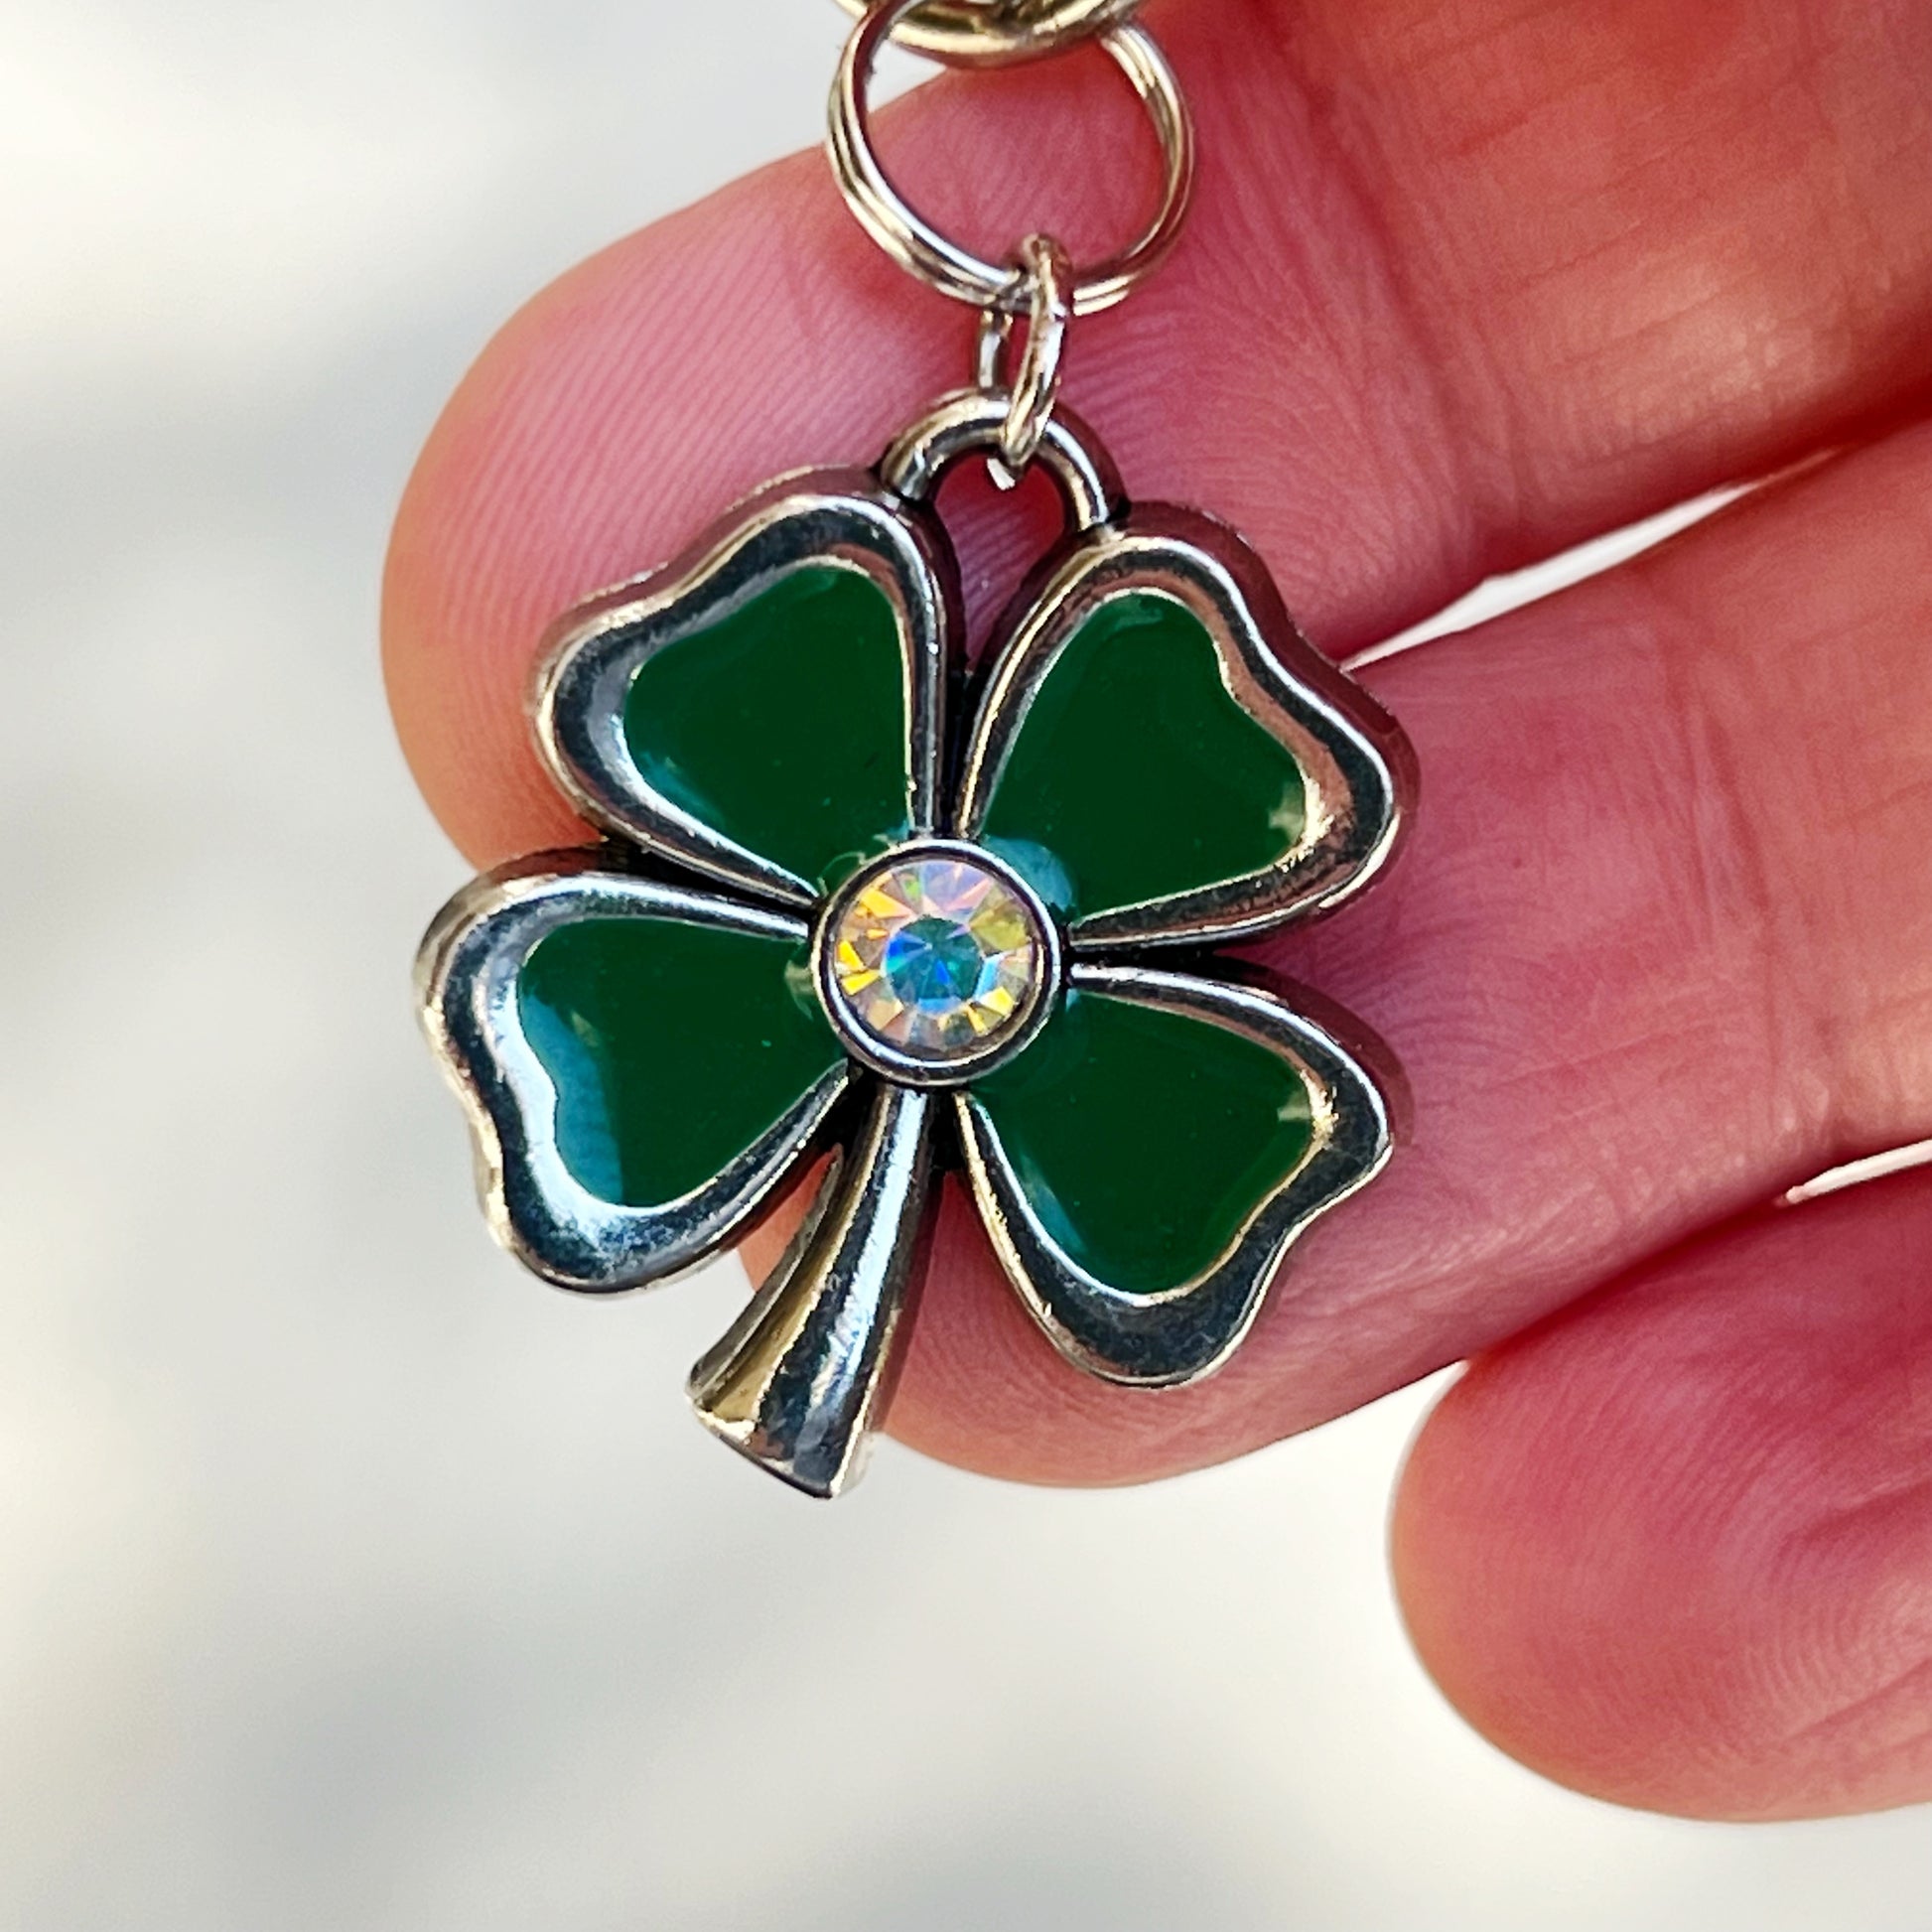 Four Leaf Clover Zipper Pull Keychain Purse Charm - Rhinestone Embellished Lucky Charm